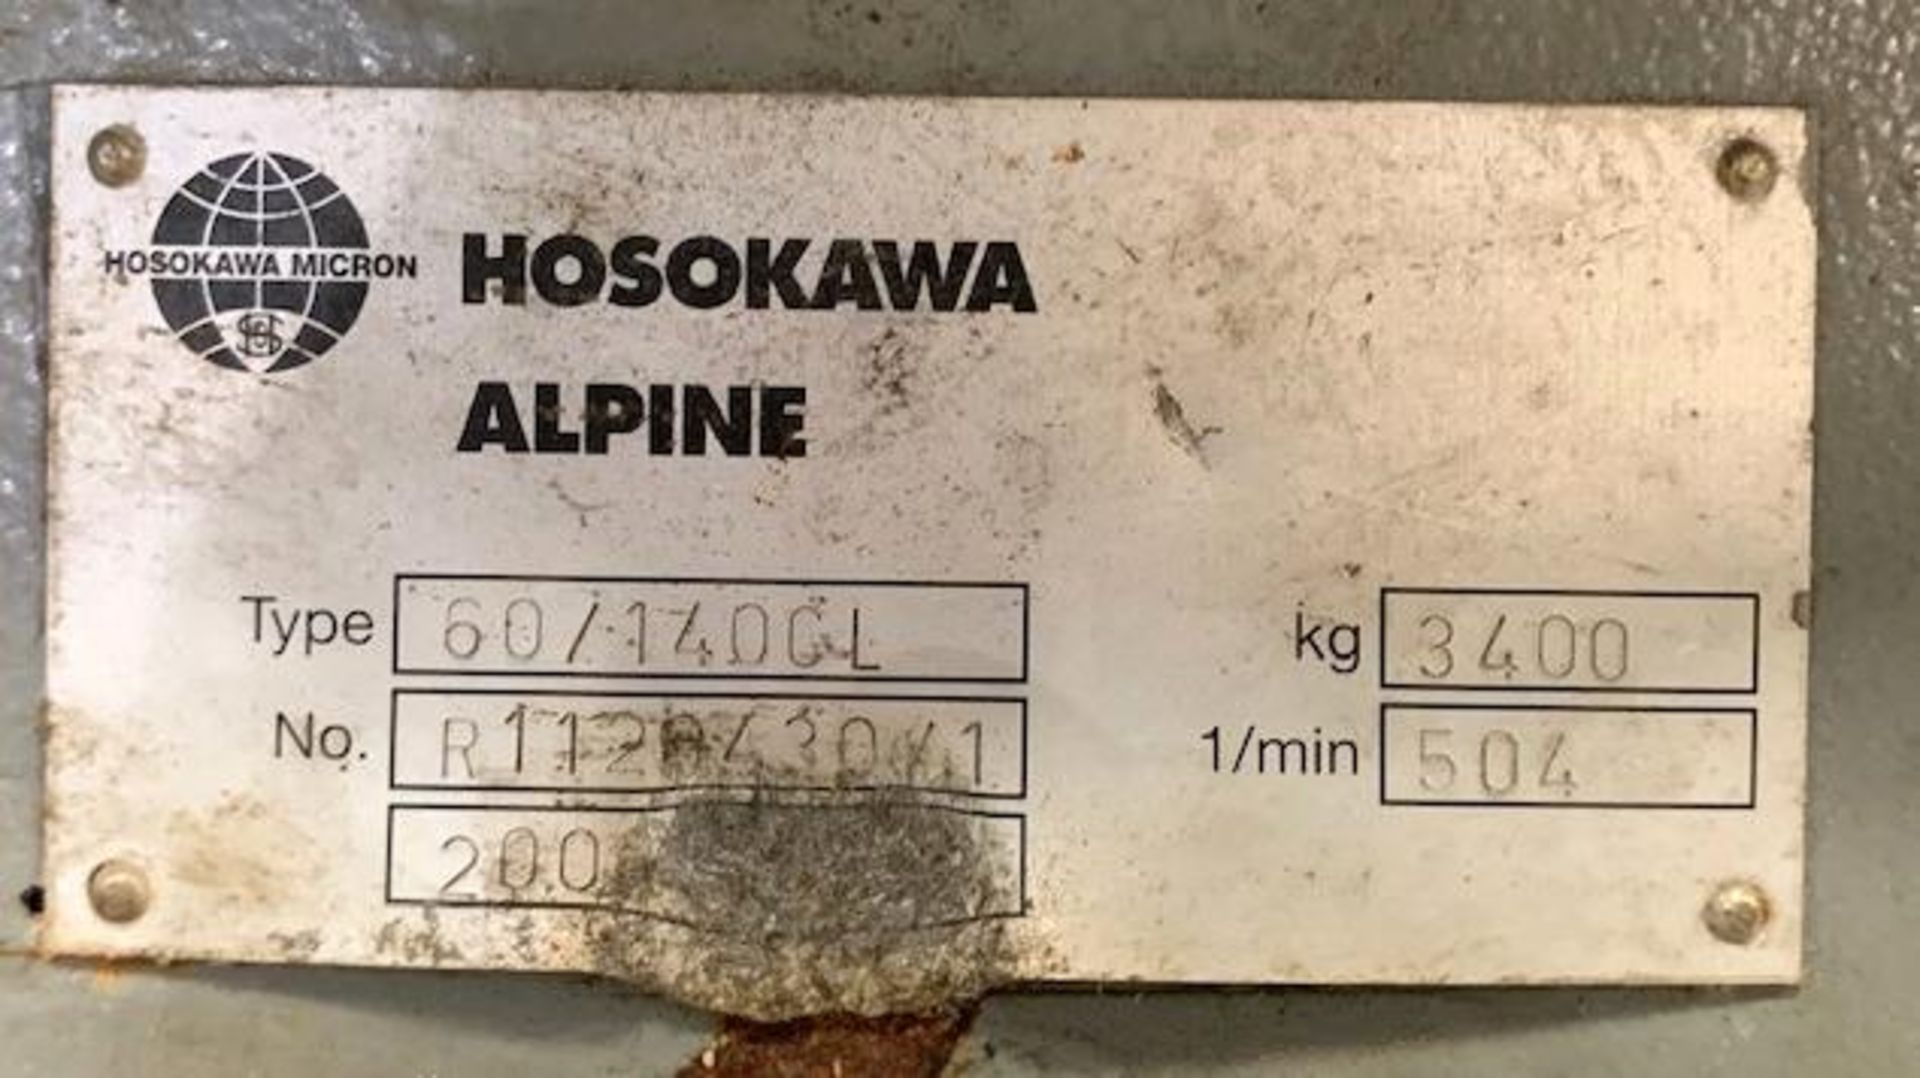 Hosokawa Alpine CL Series Granulator, Model 60/140 CL - Image 19 of 26